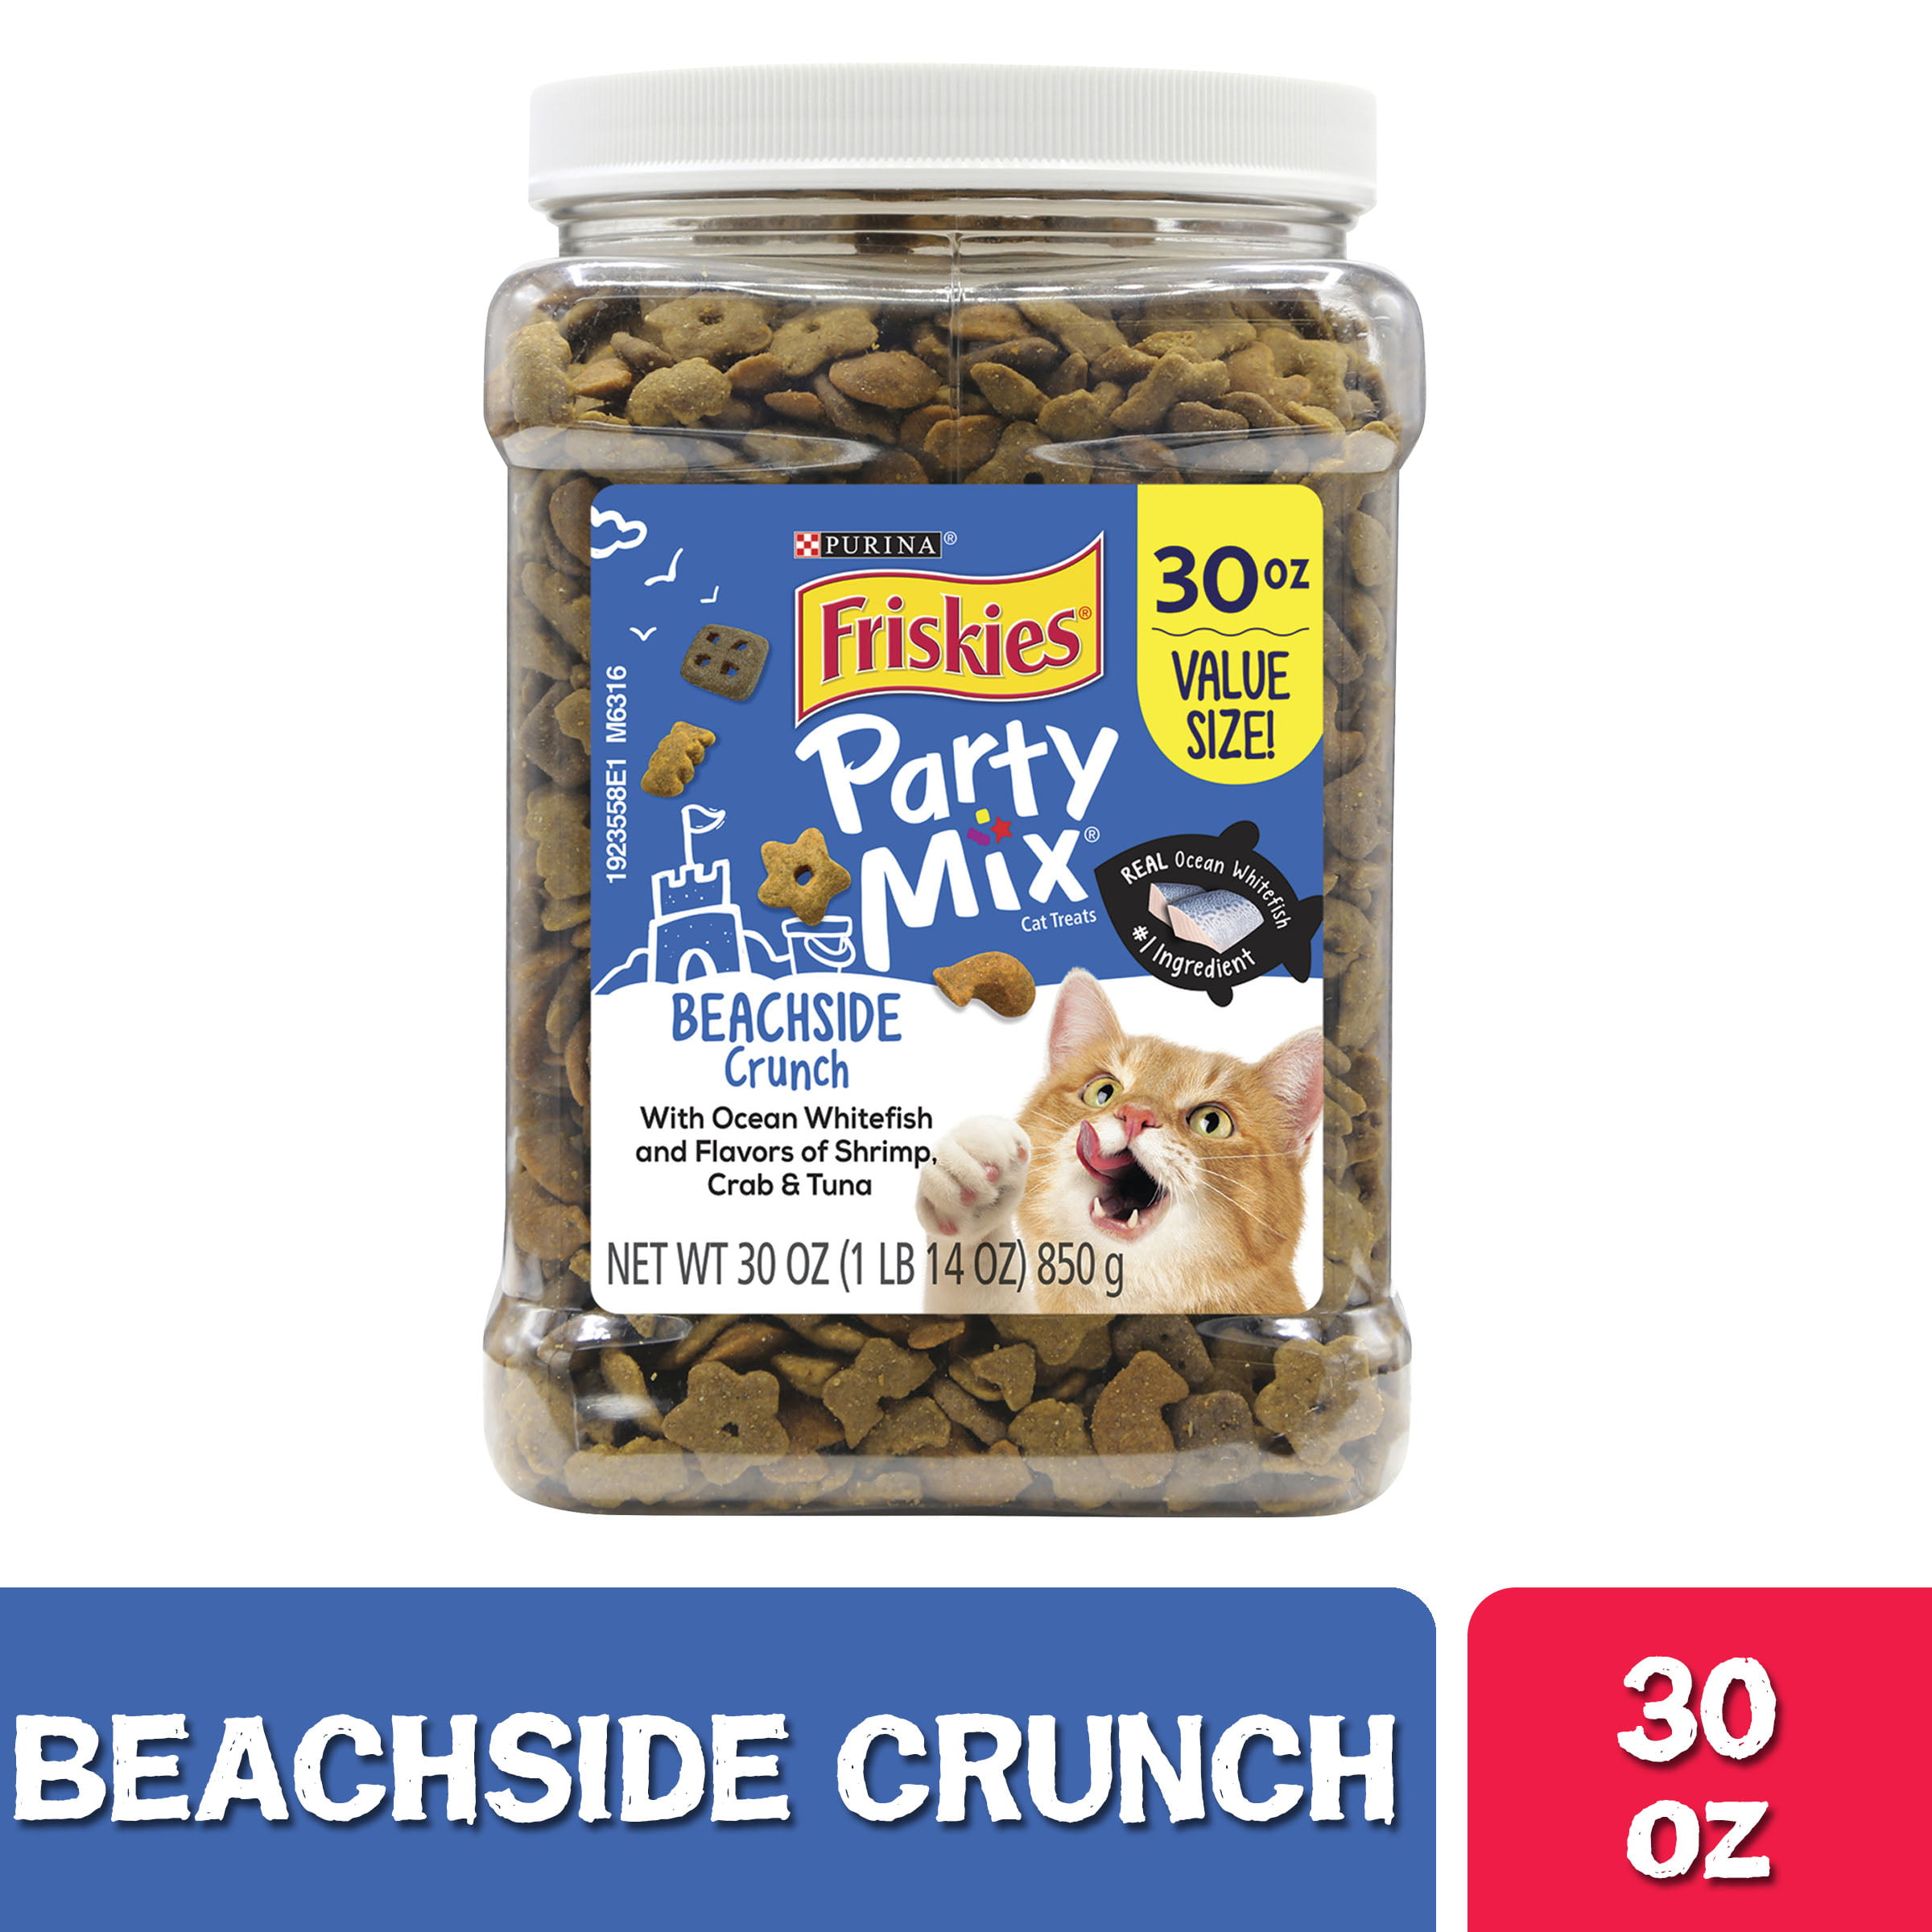 Friskies Cat Treats, Party Mix Beachside Crunch, 30 oz. Canister